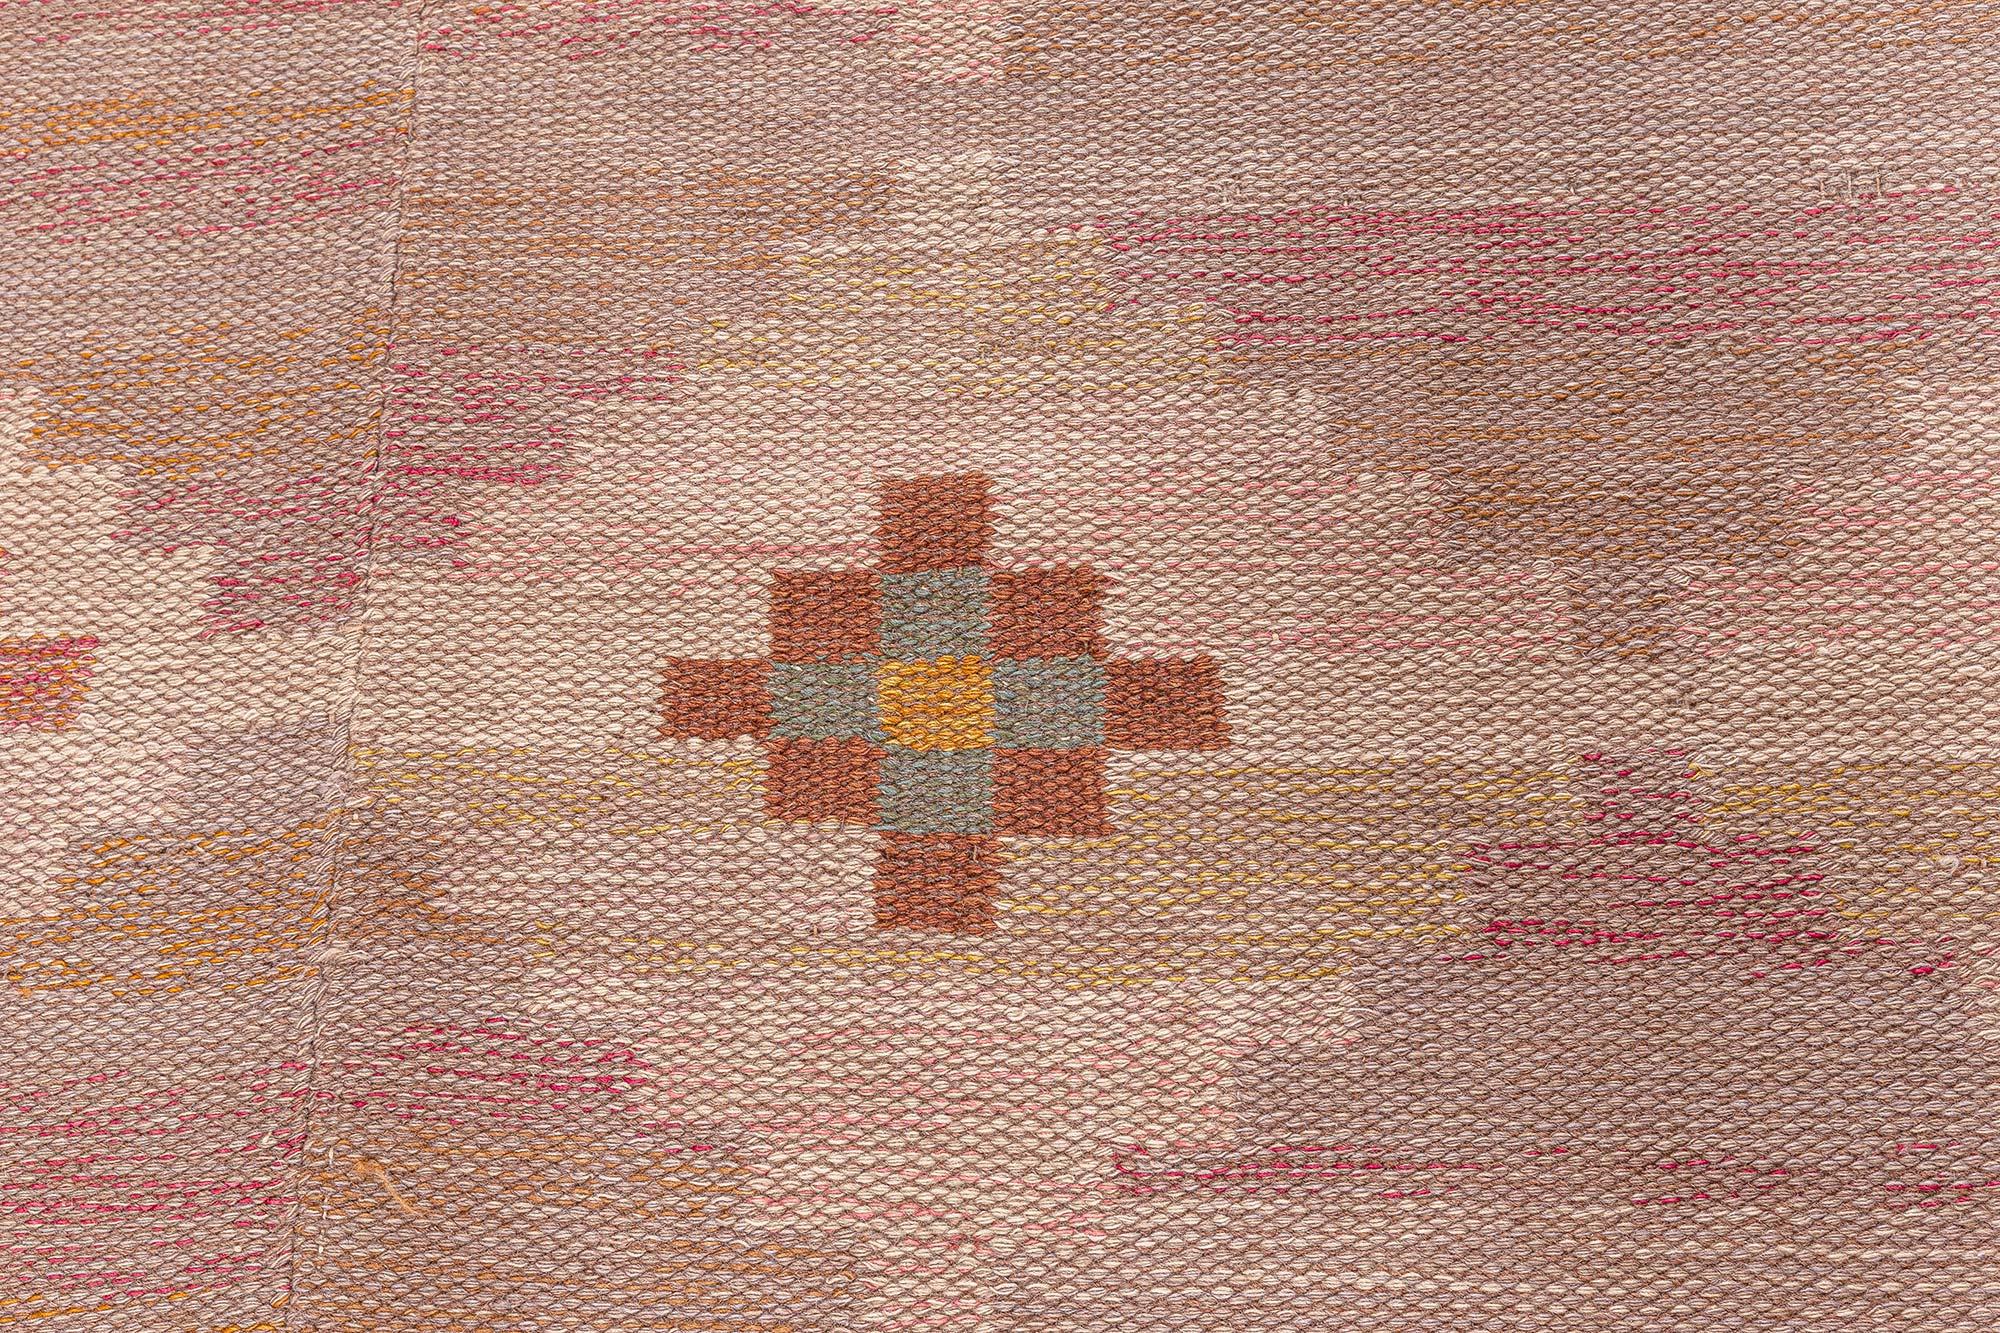 Vintage Swedish rug
Size: 8'9